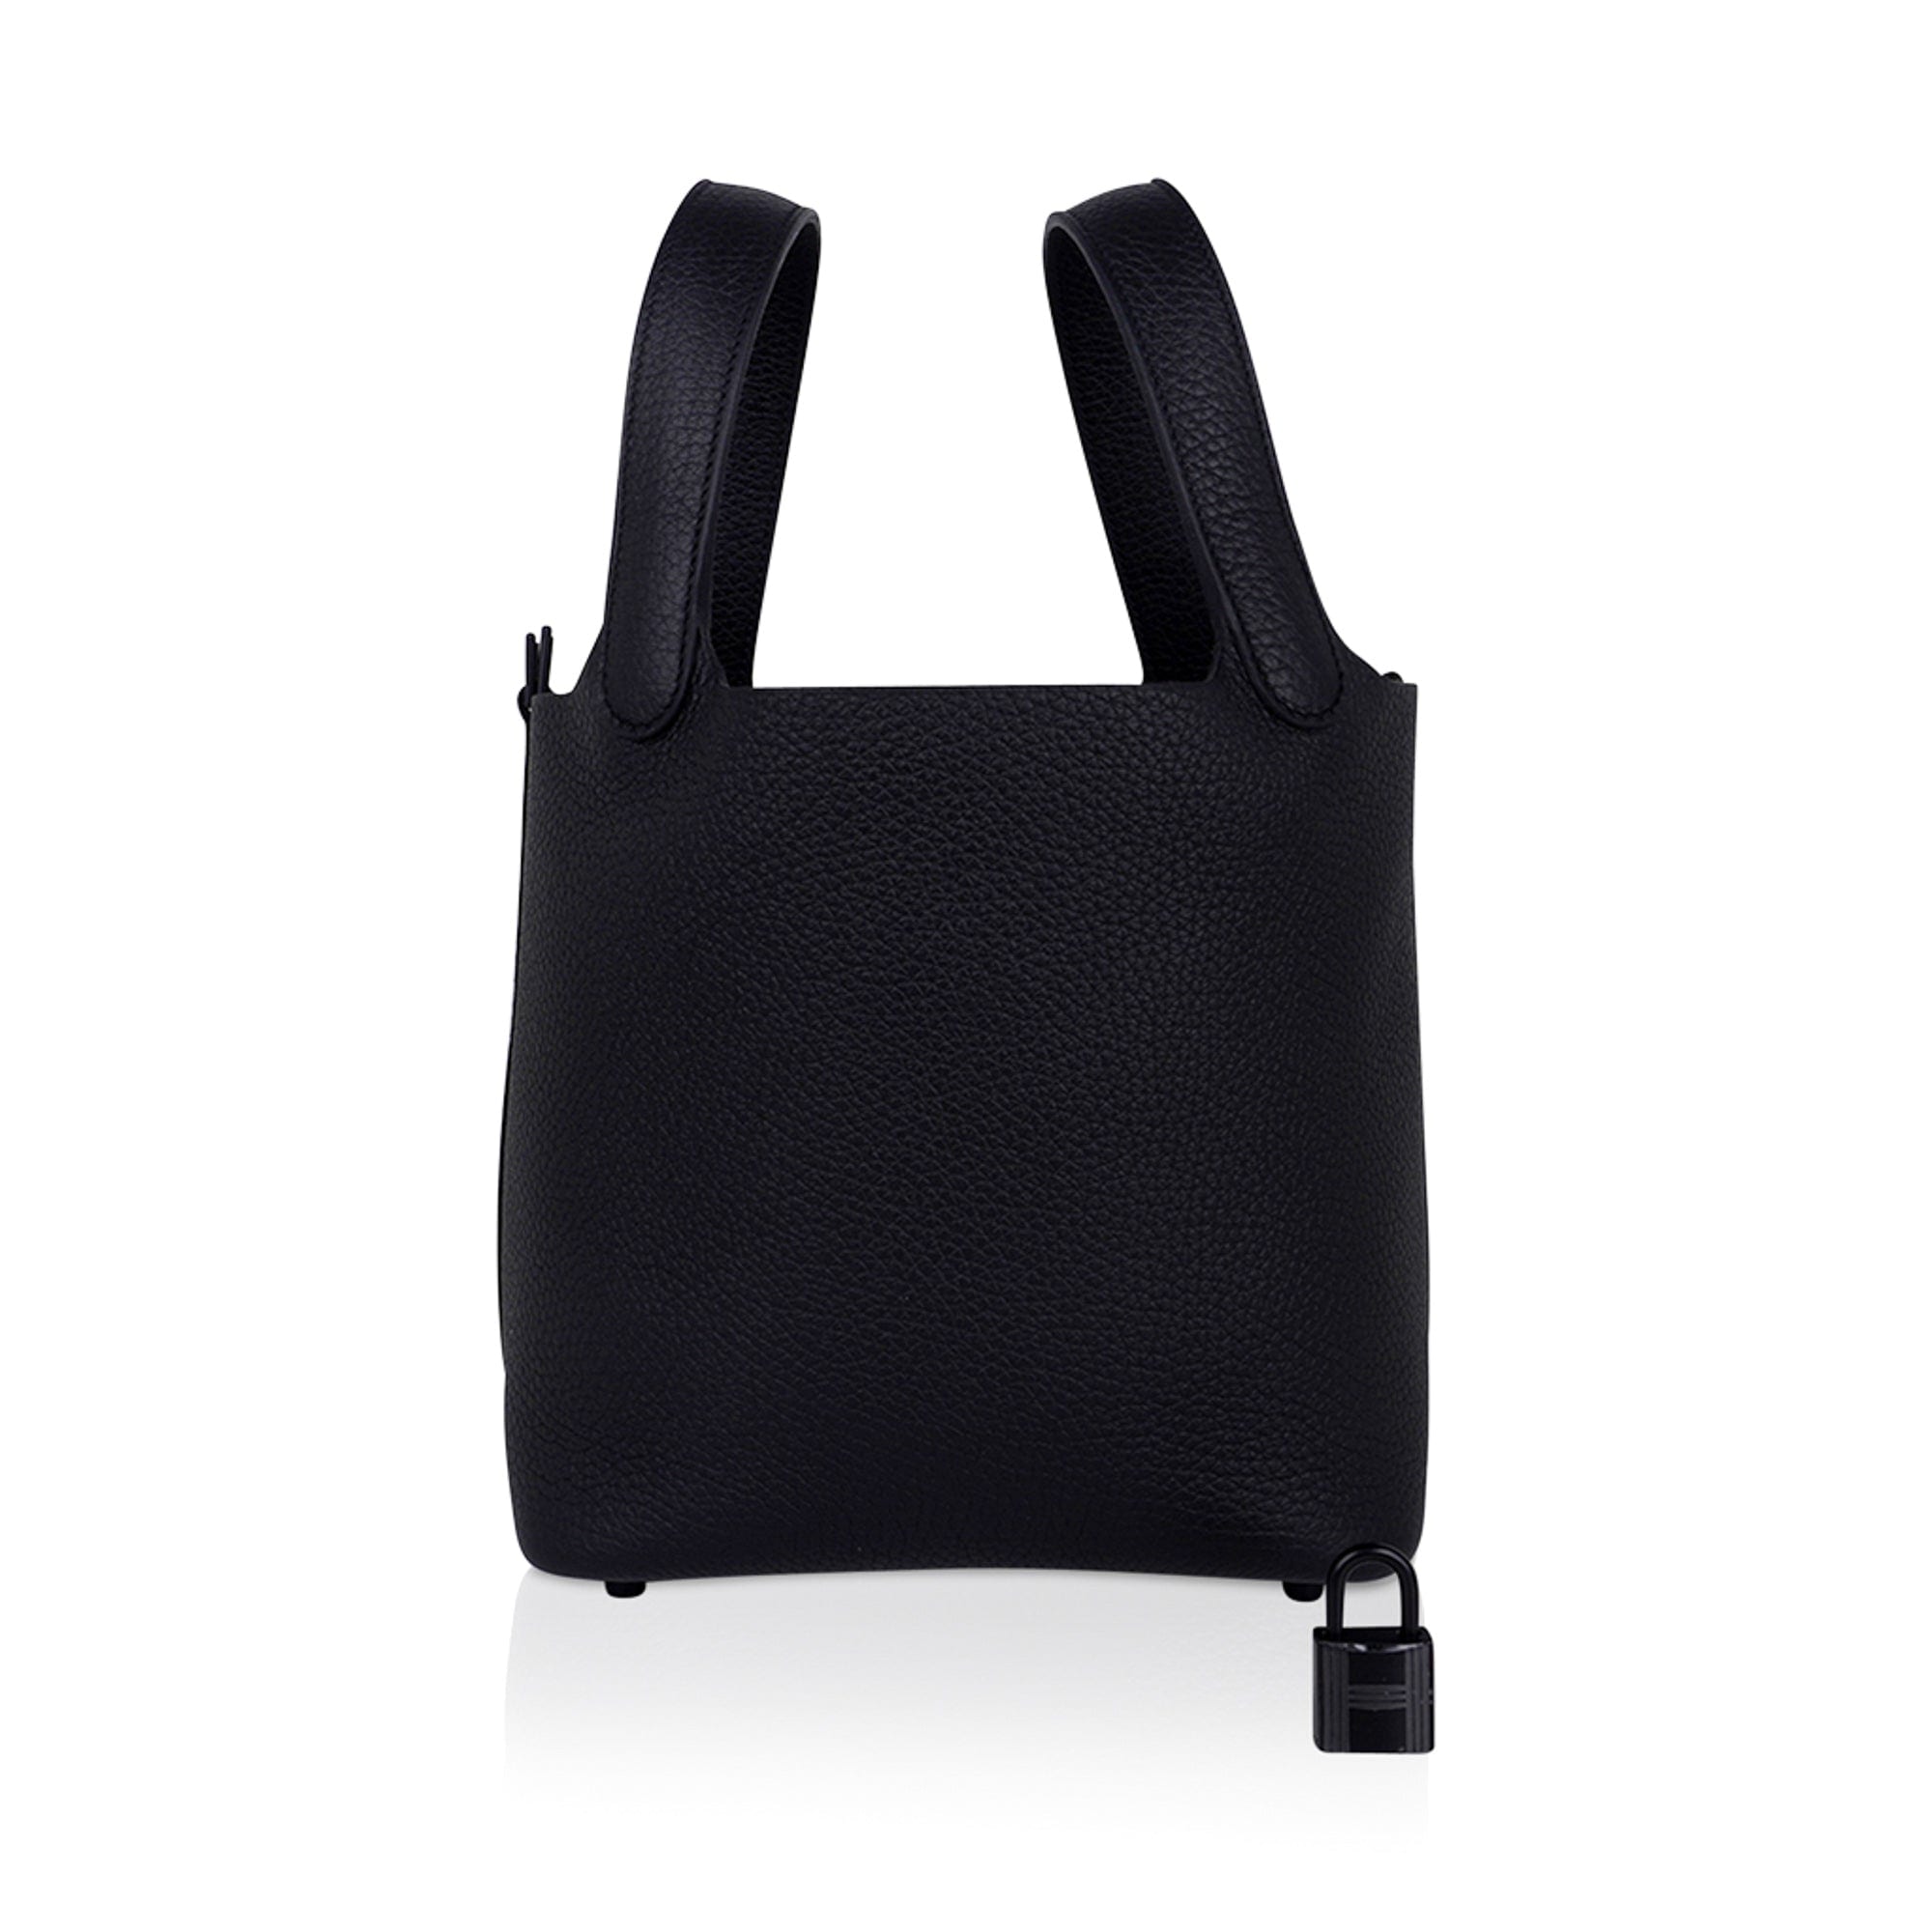 Hermes So Black Picotin Lock 18 Tote Bag Limited Edition at